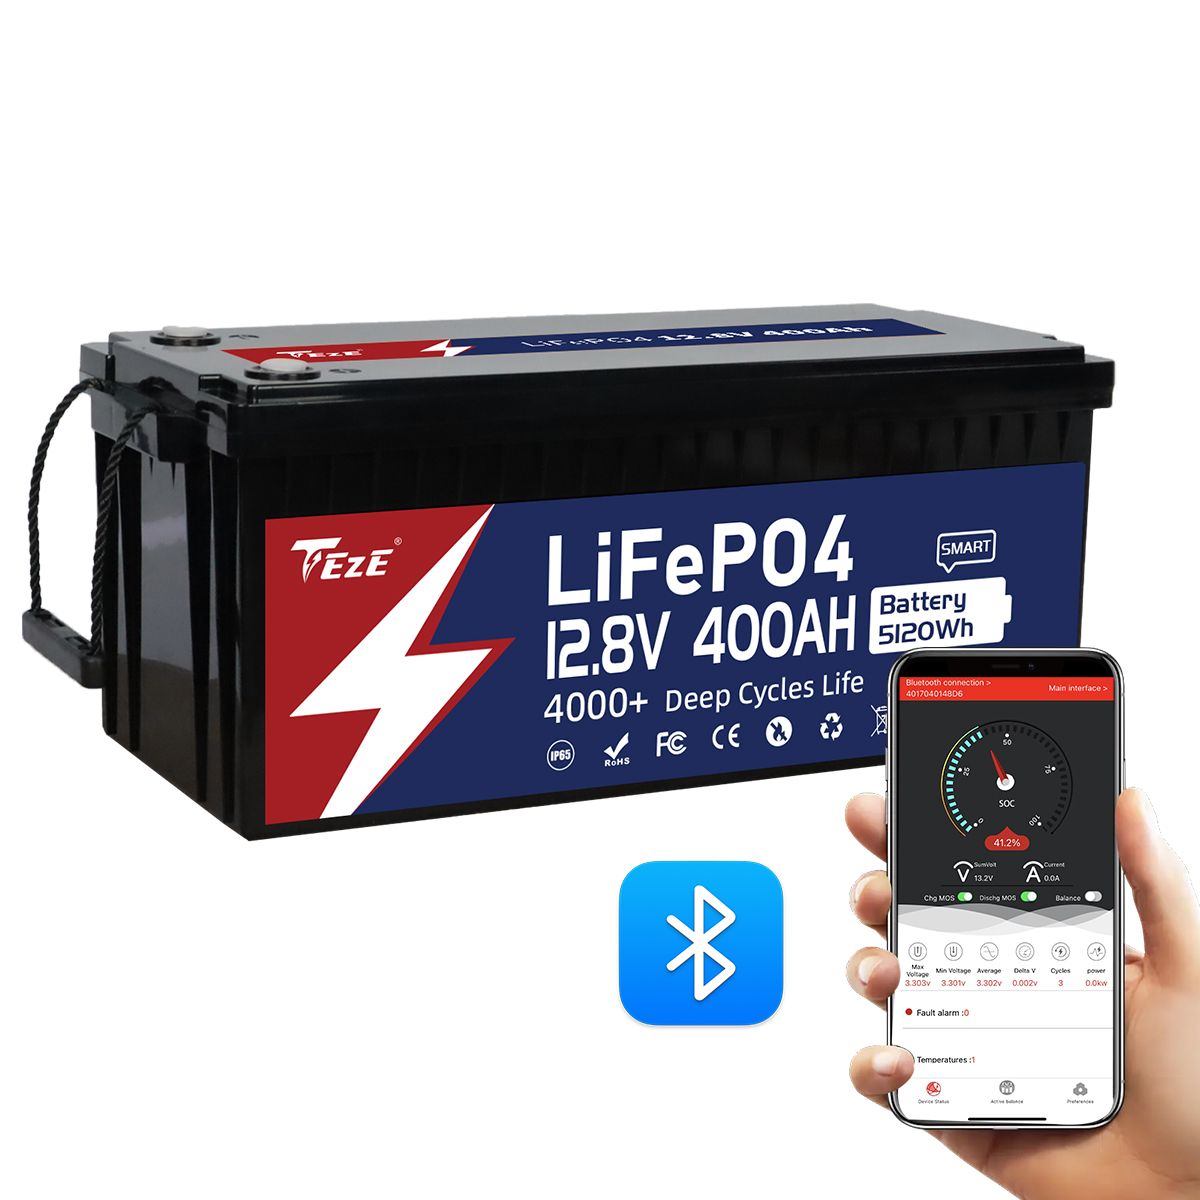  LiFePO4 Battery 12V 400Ah Lithium Battery, Built-in